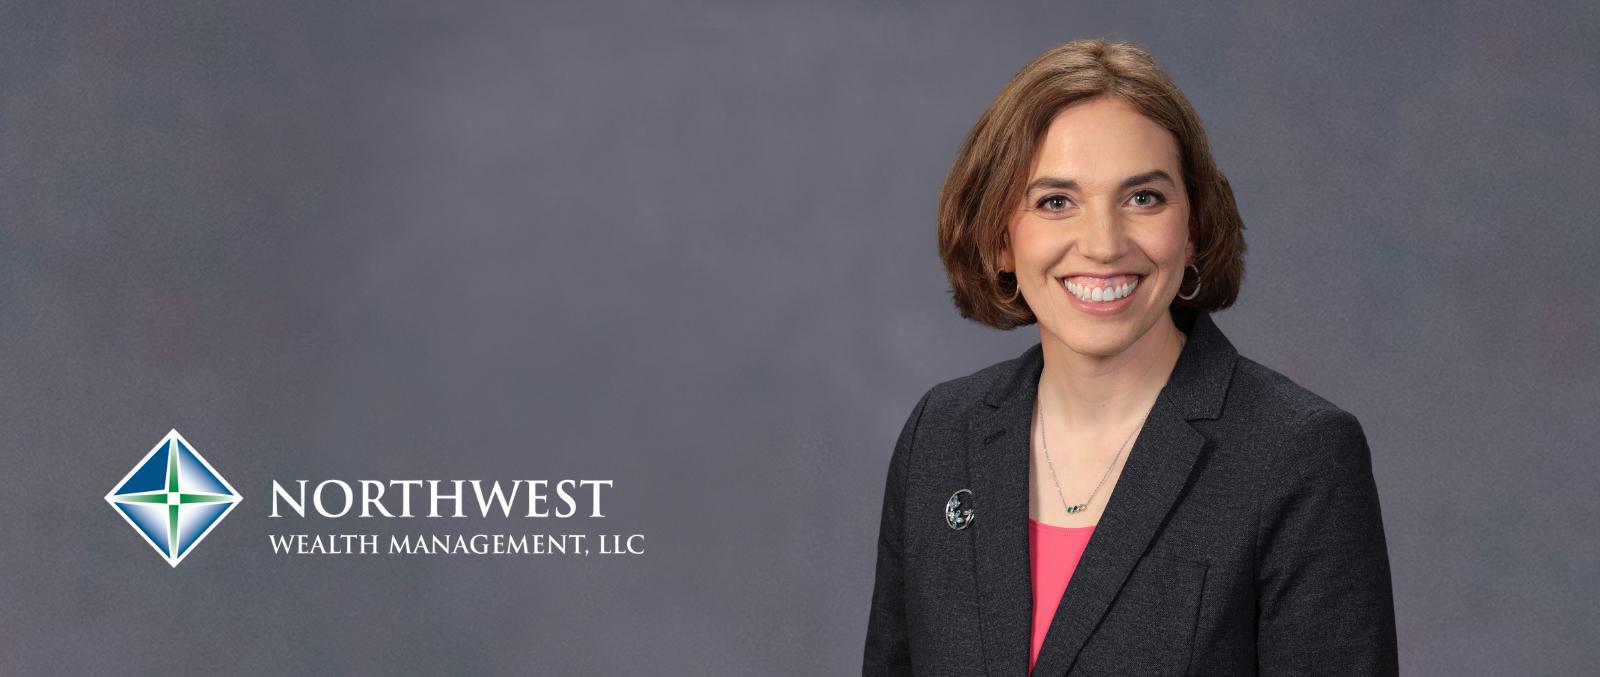 Northwest Wealth Management logo and photo of Lisa Grefe